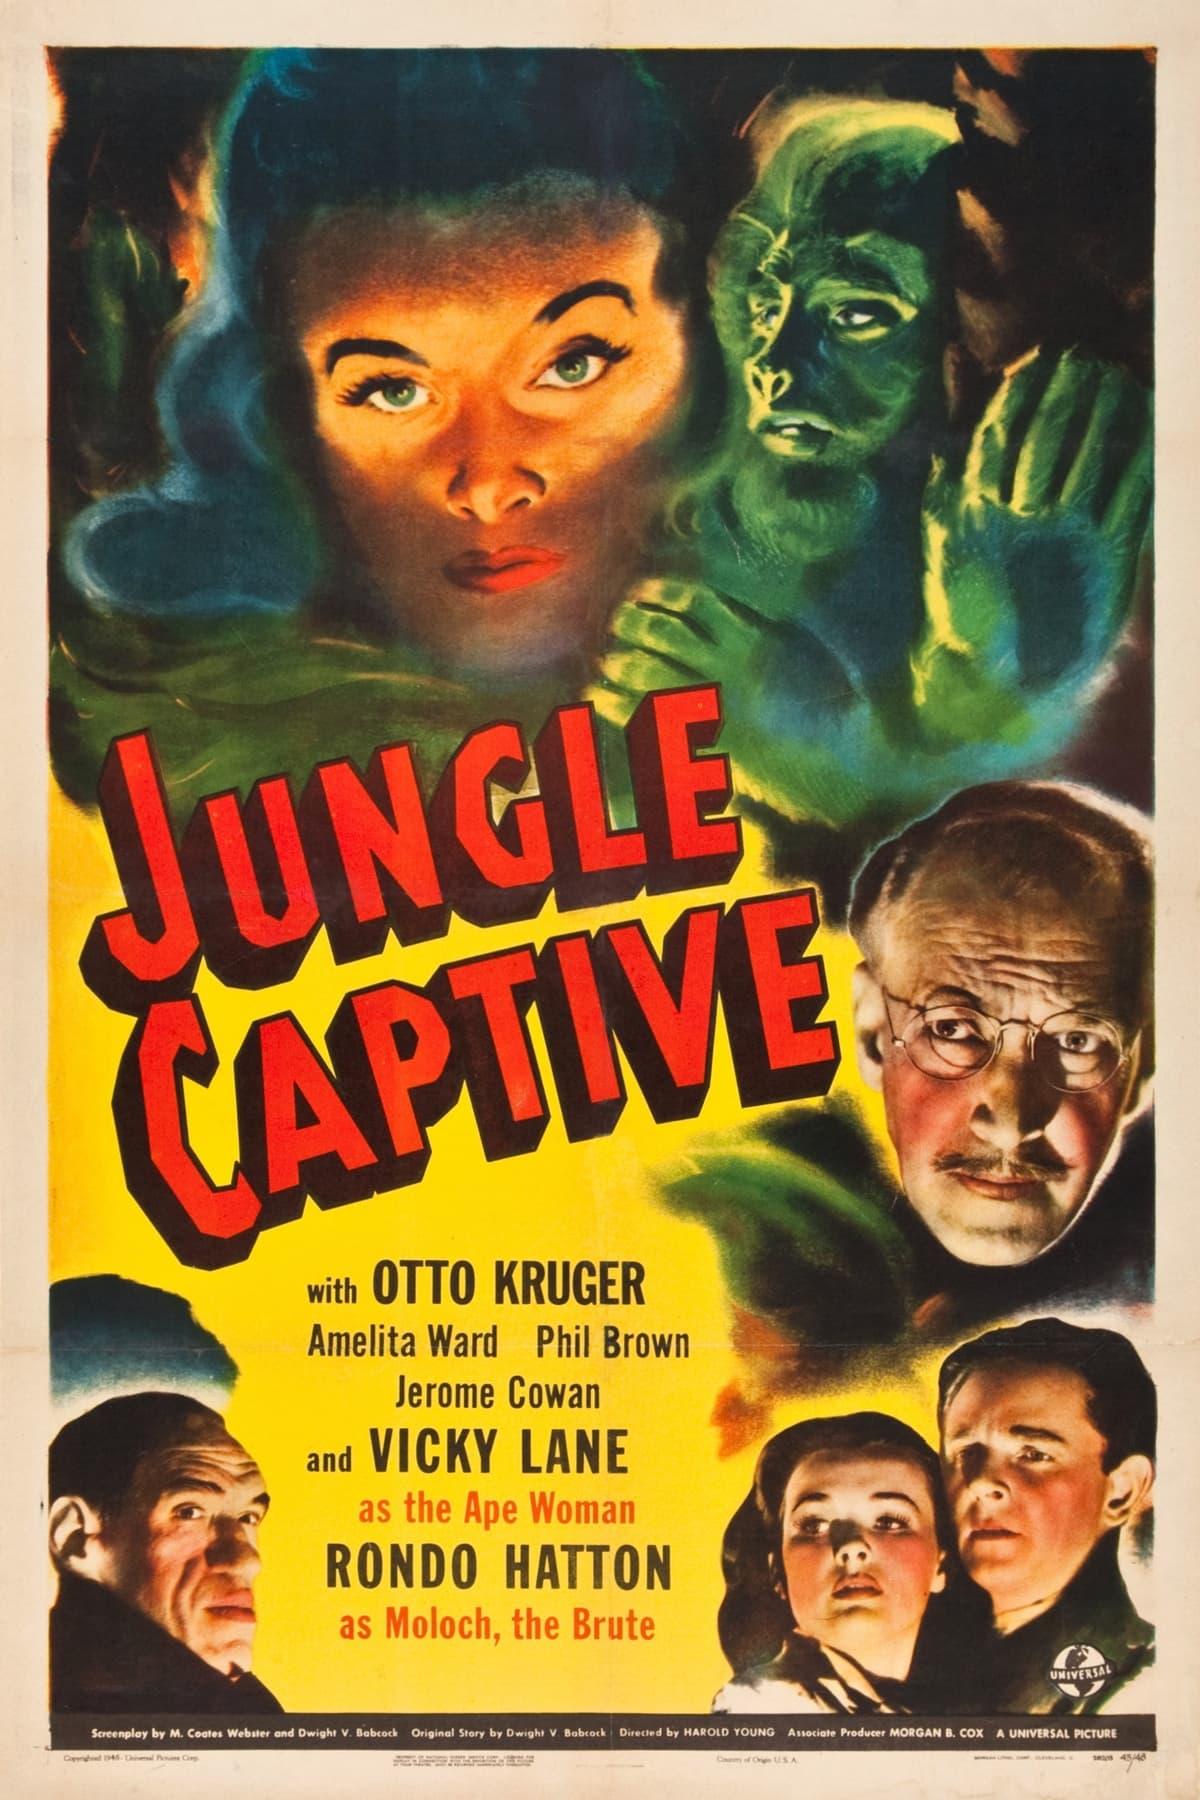 The Jungle Captive poster